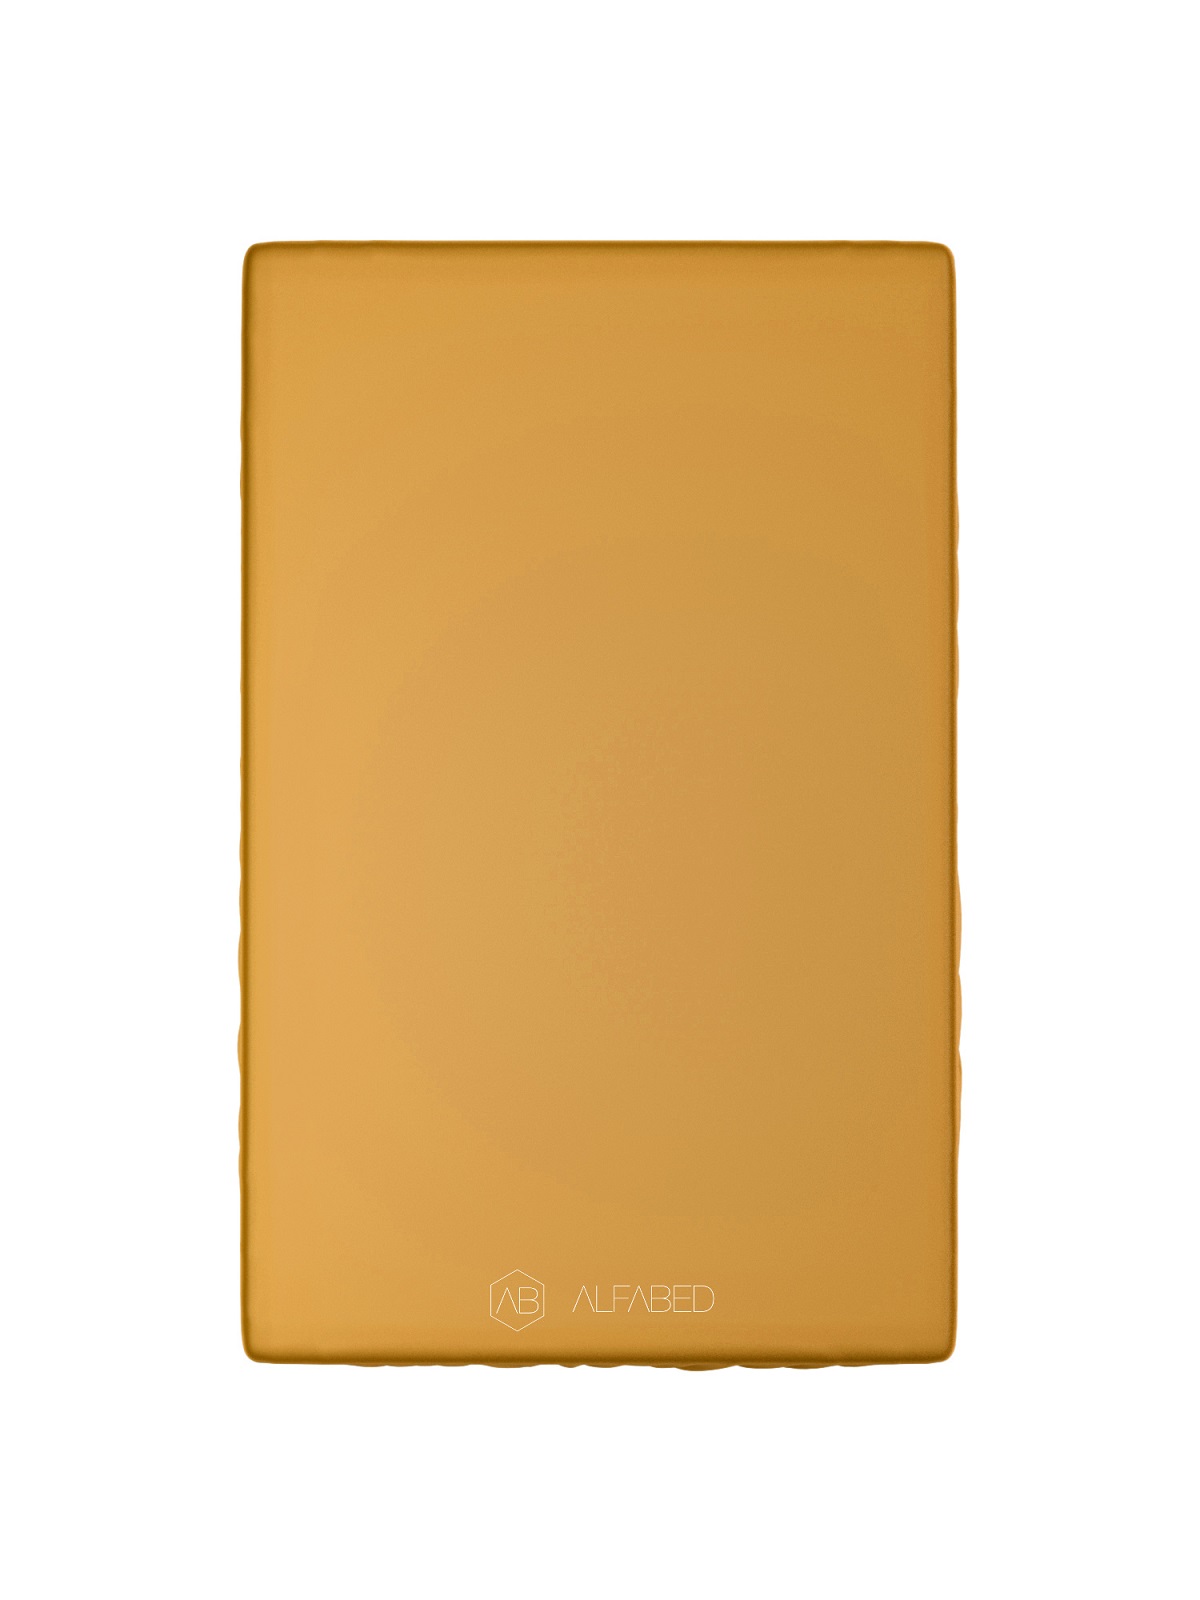 Pillow Top Fitted Sheet Royal Cotton Sateen Honey H-10 1